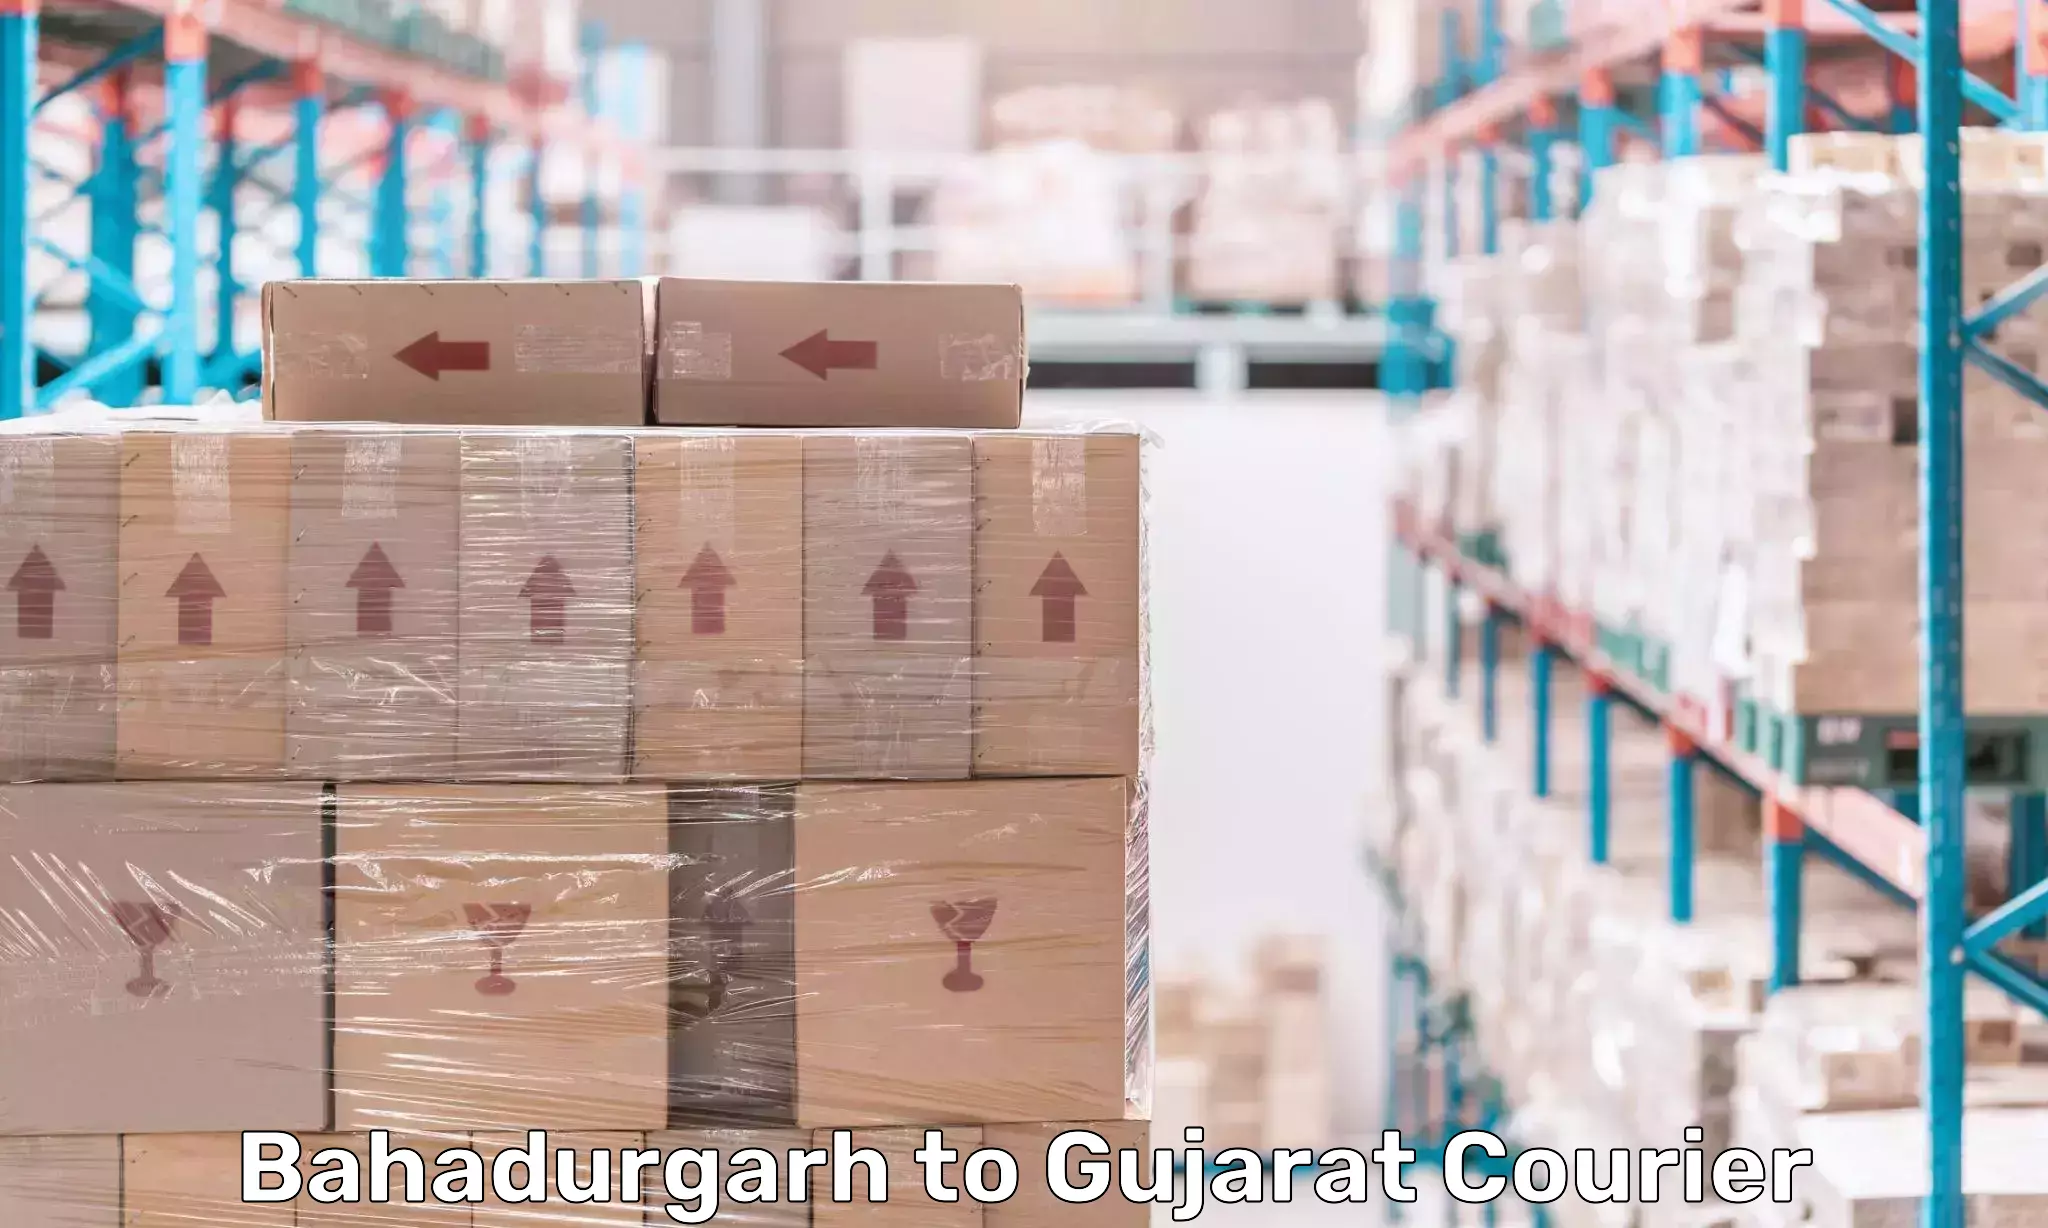 Logistics service provider Bahadurgarh to Gandhinagar